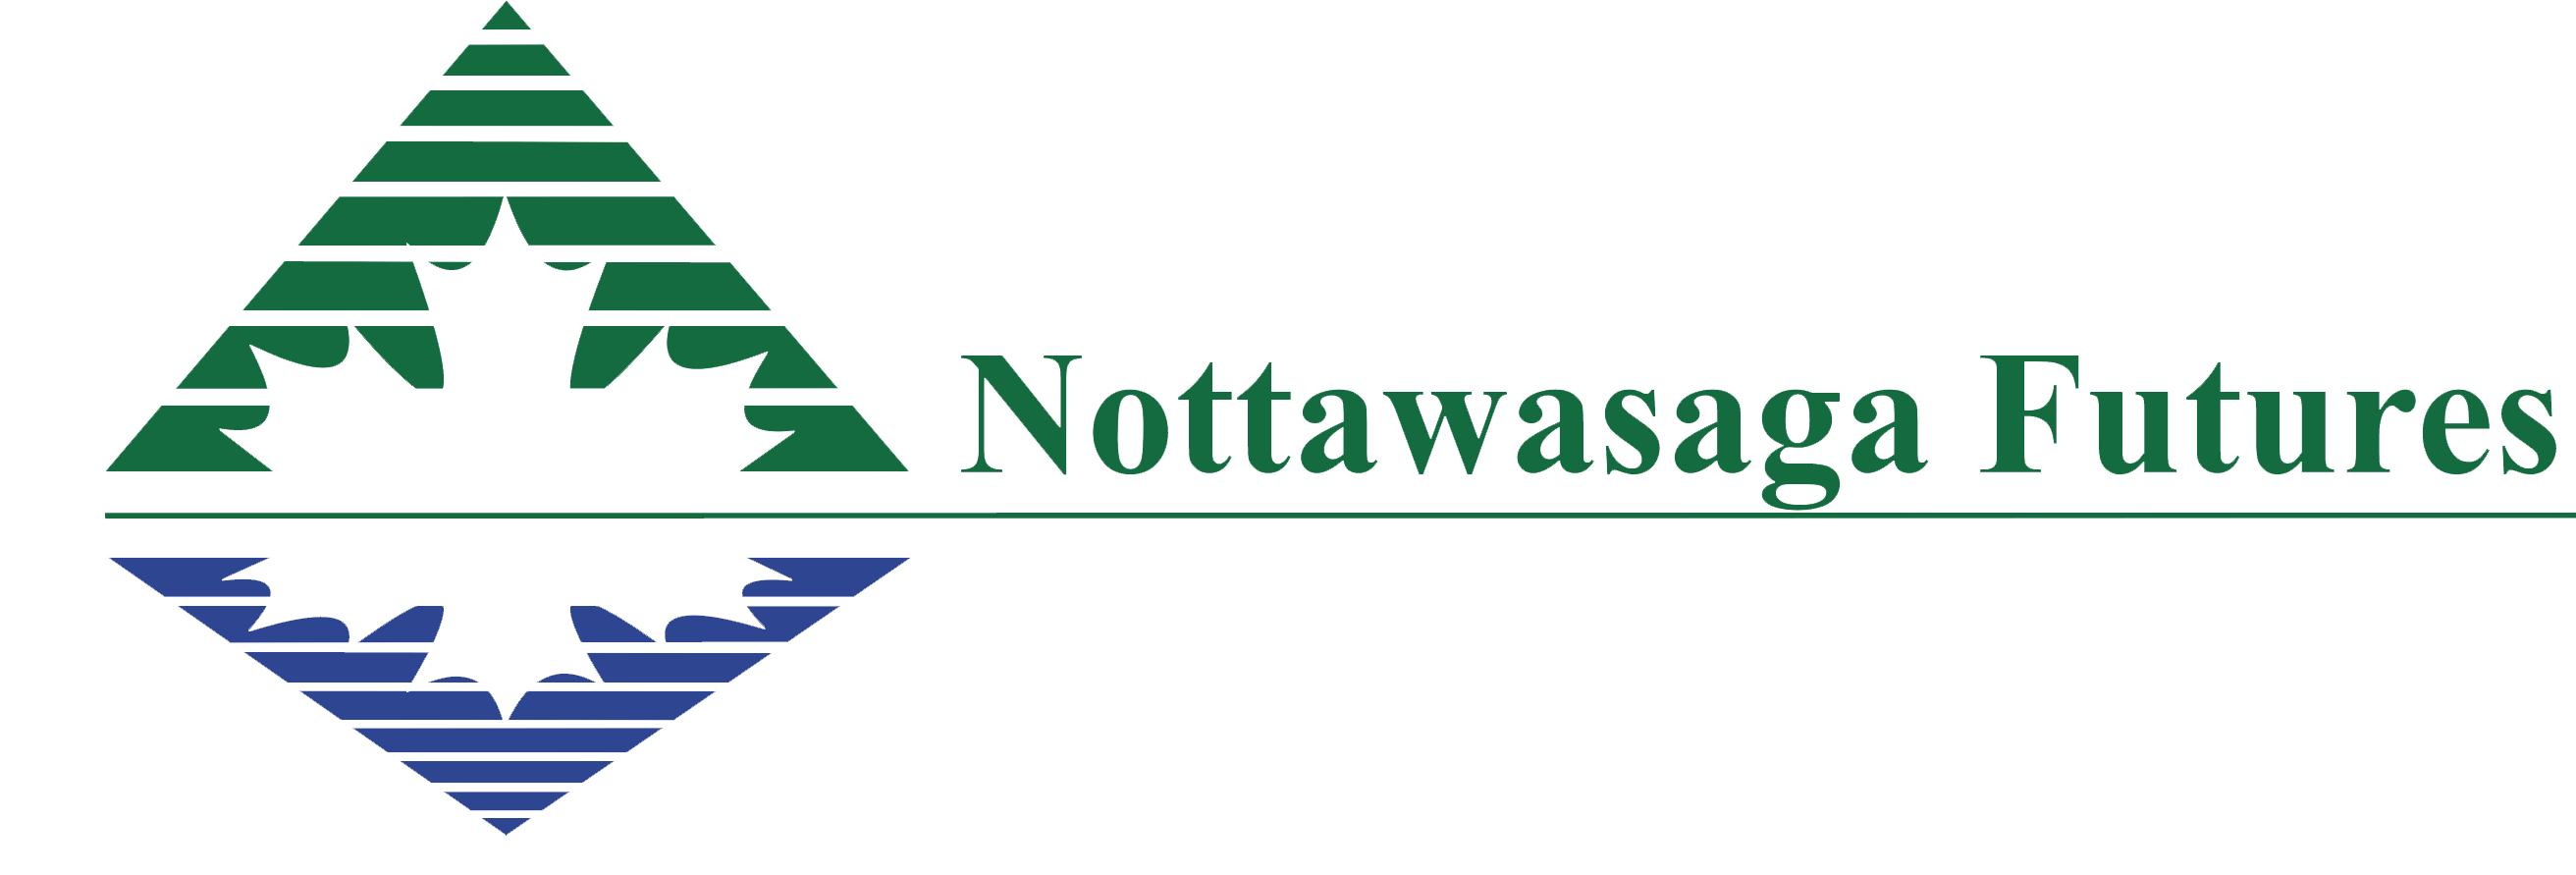 Nottawasaga Futures logo